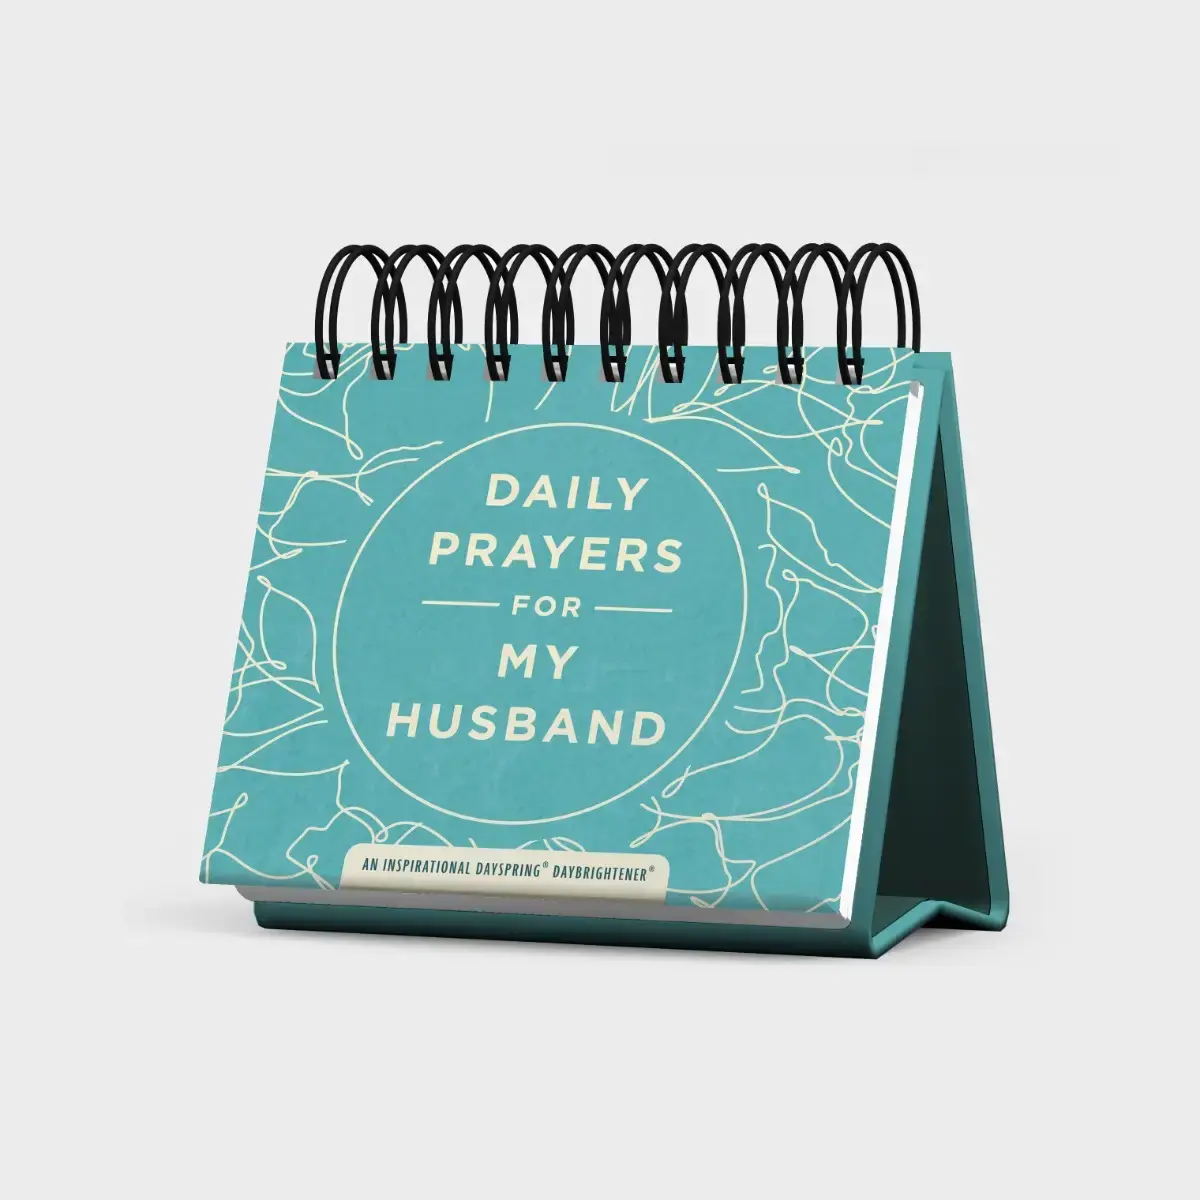 Daily Prayers for My Husband Daybrightener